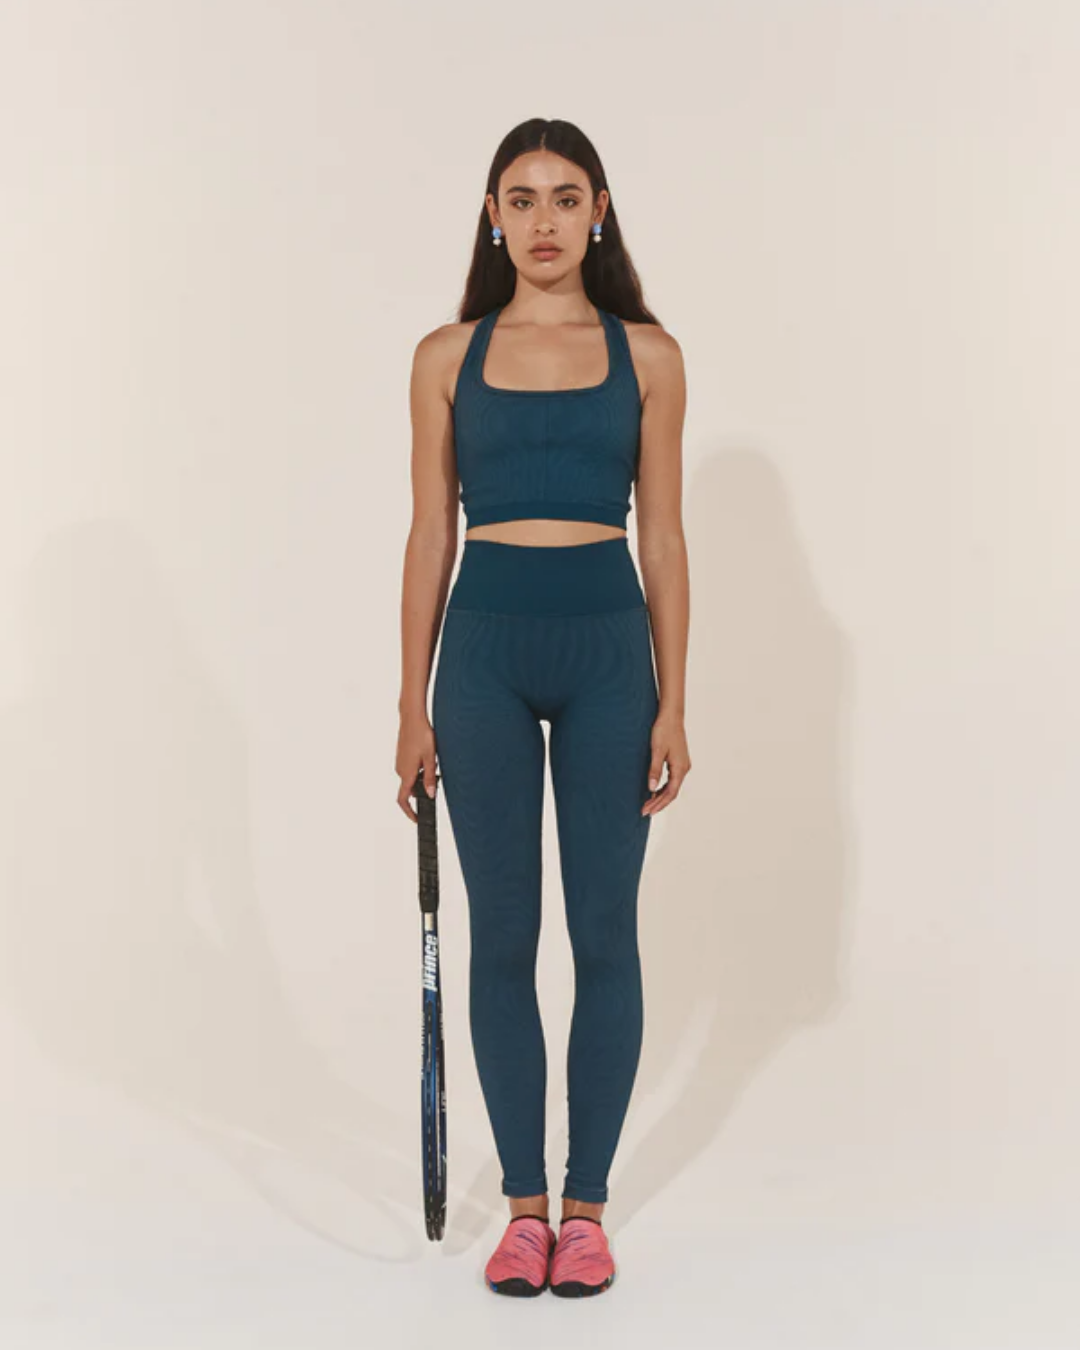 Move Legging 02 - Deep Blue Activewear by Pinky & Kamal - Prae Wellness